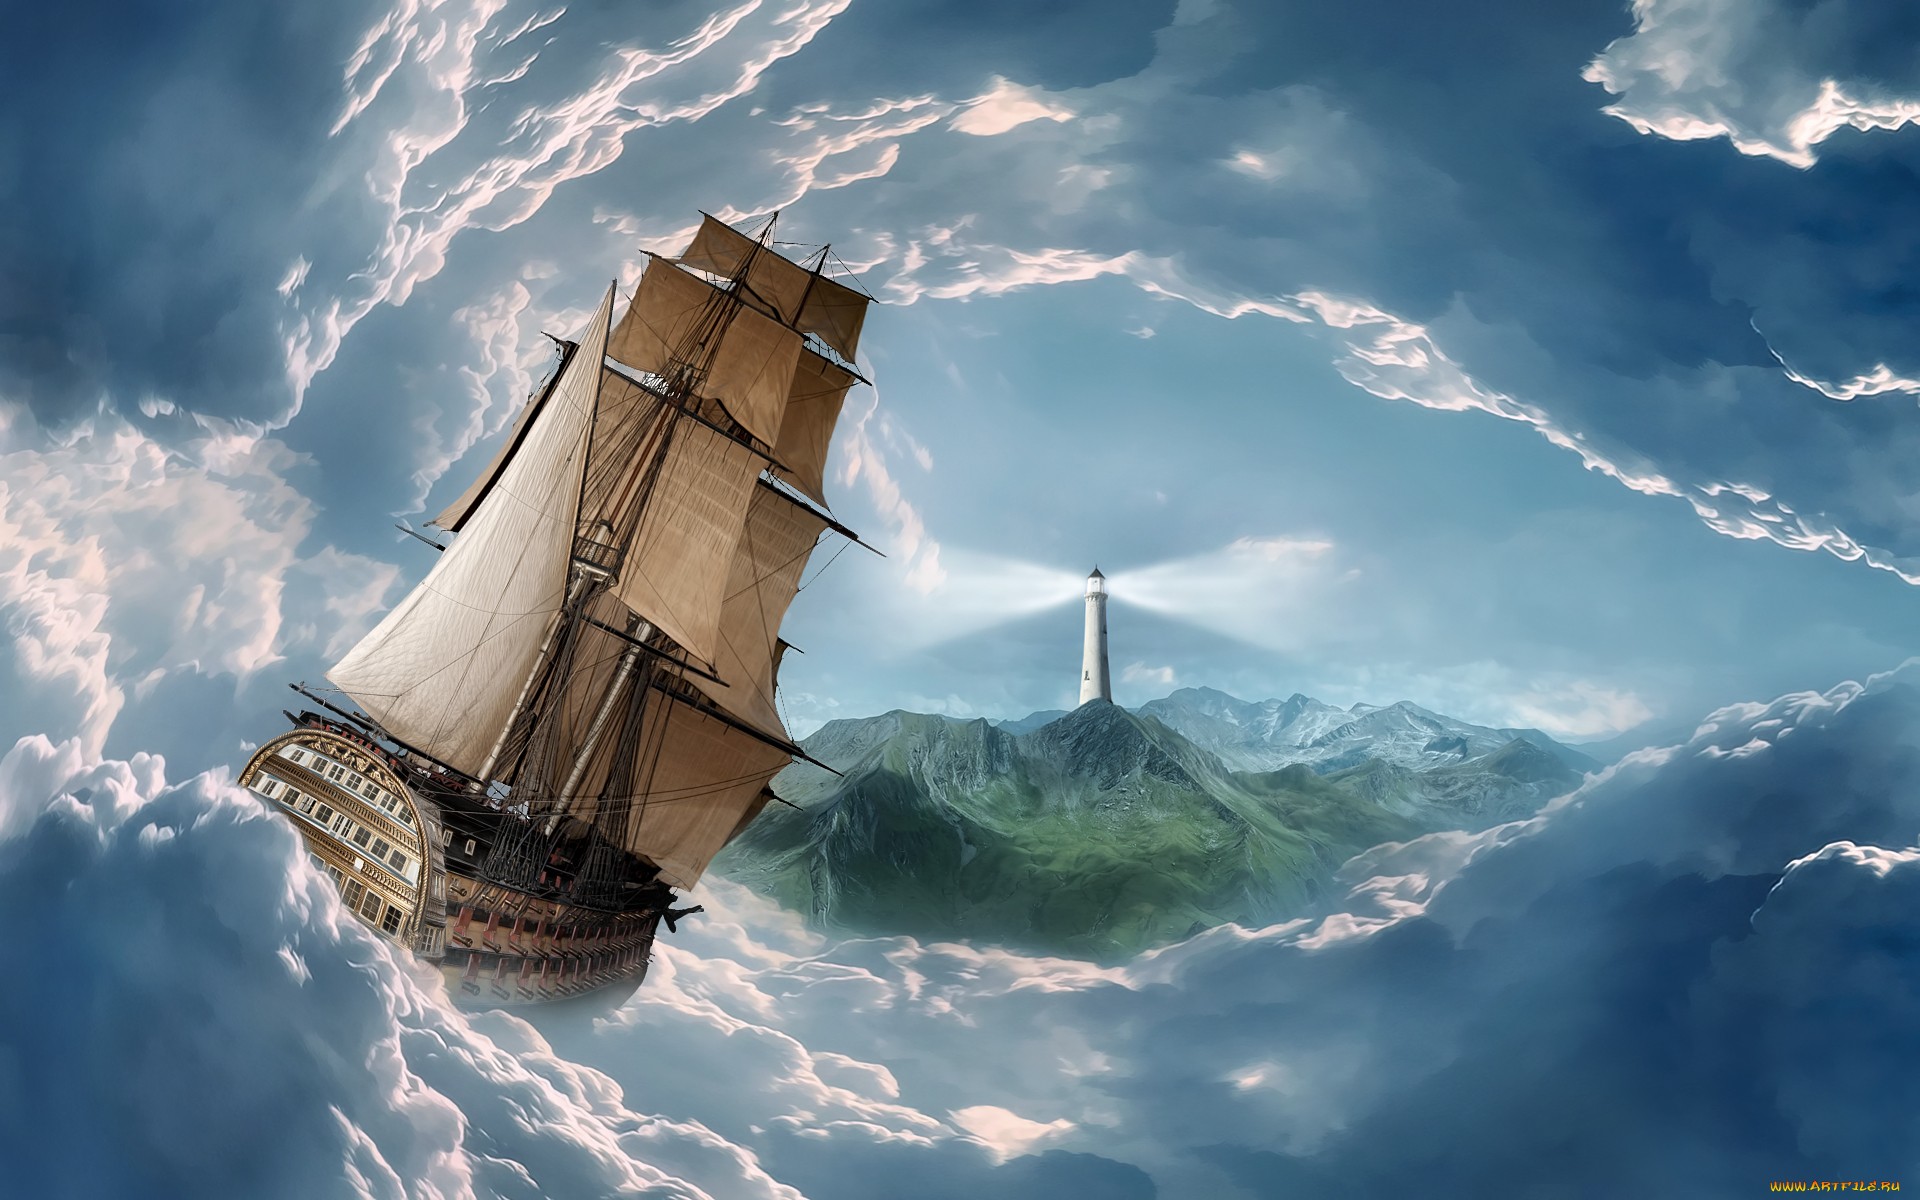 General 1920x1200 sailing ship sea lighthouse fantasy art ship artwork